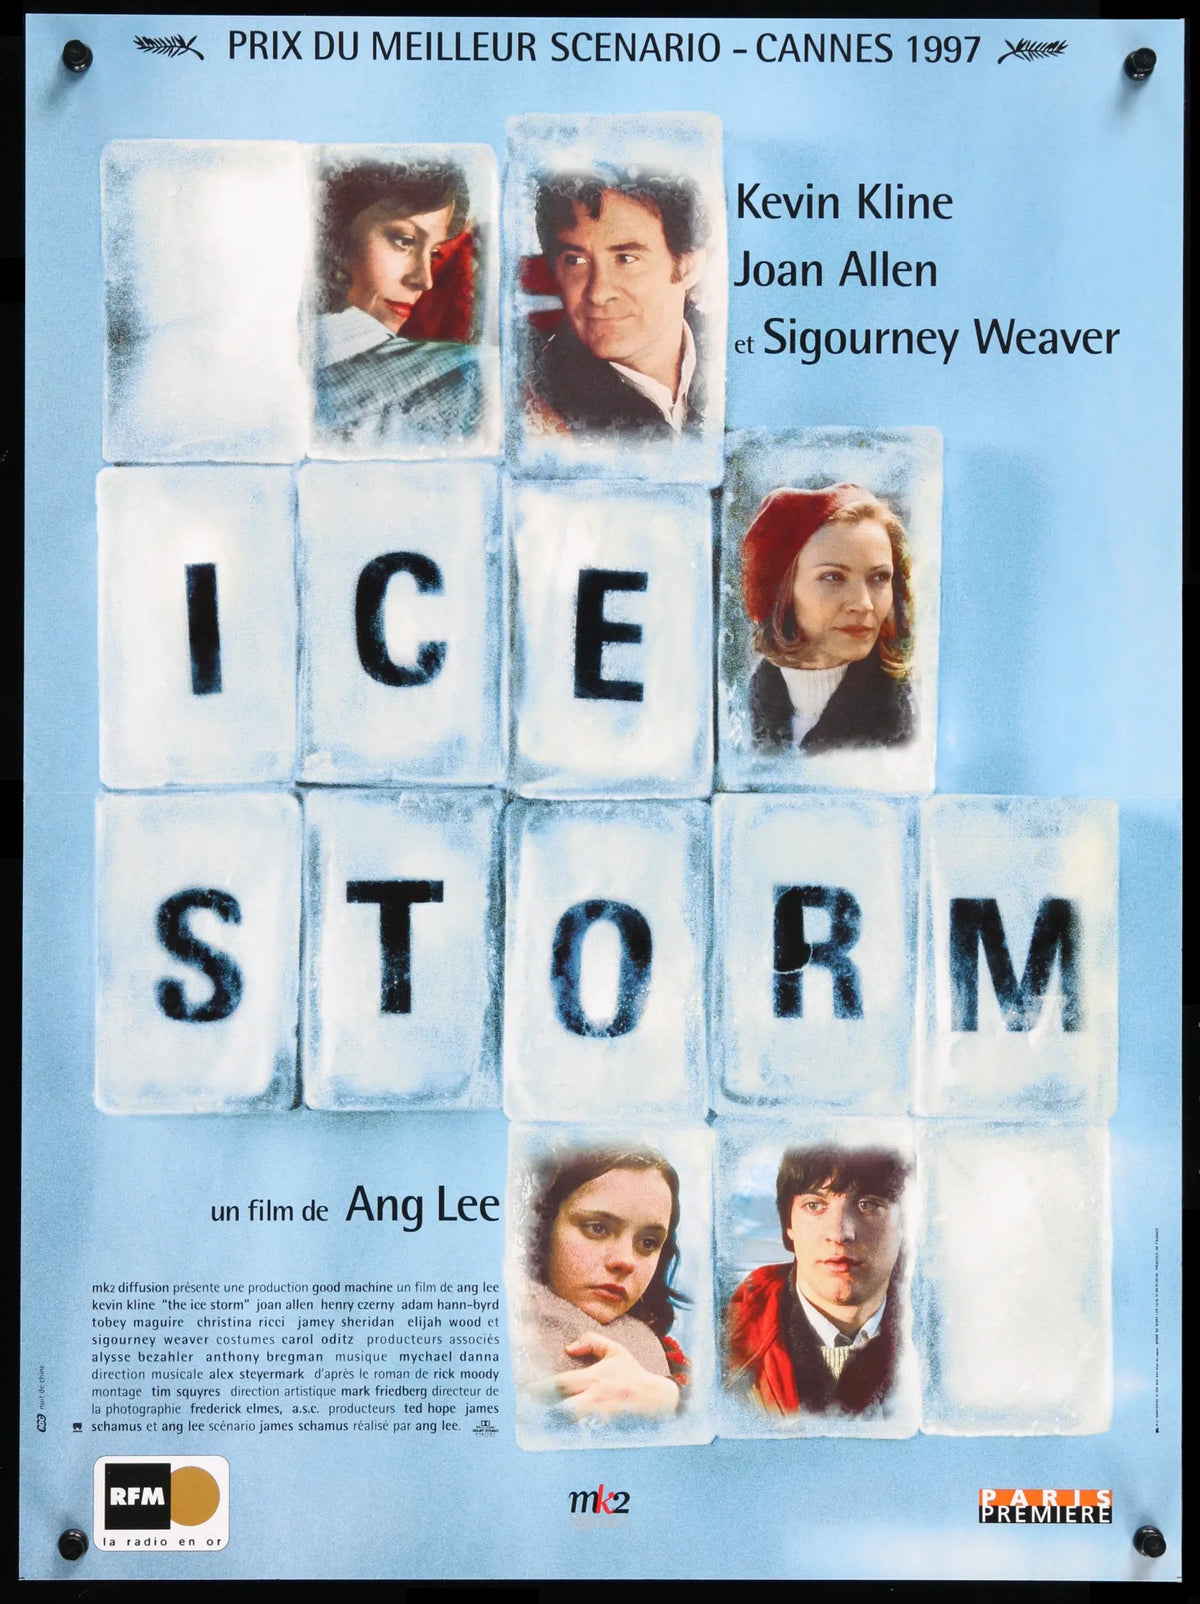 Ice Storm (1997) original movie poster for sale at Original Film Art